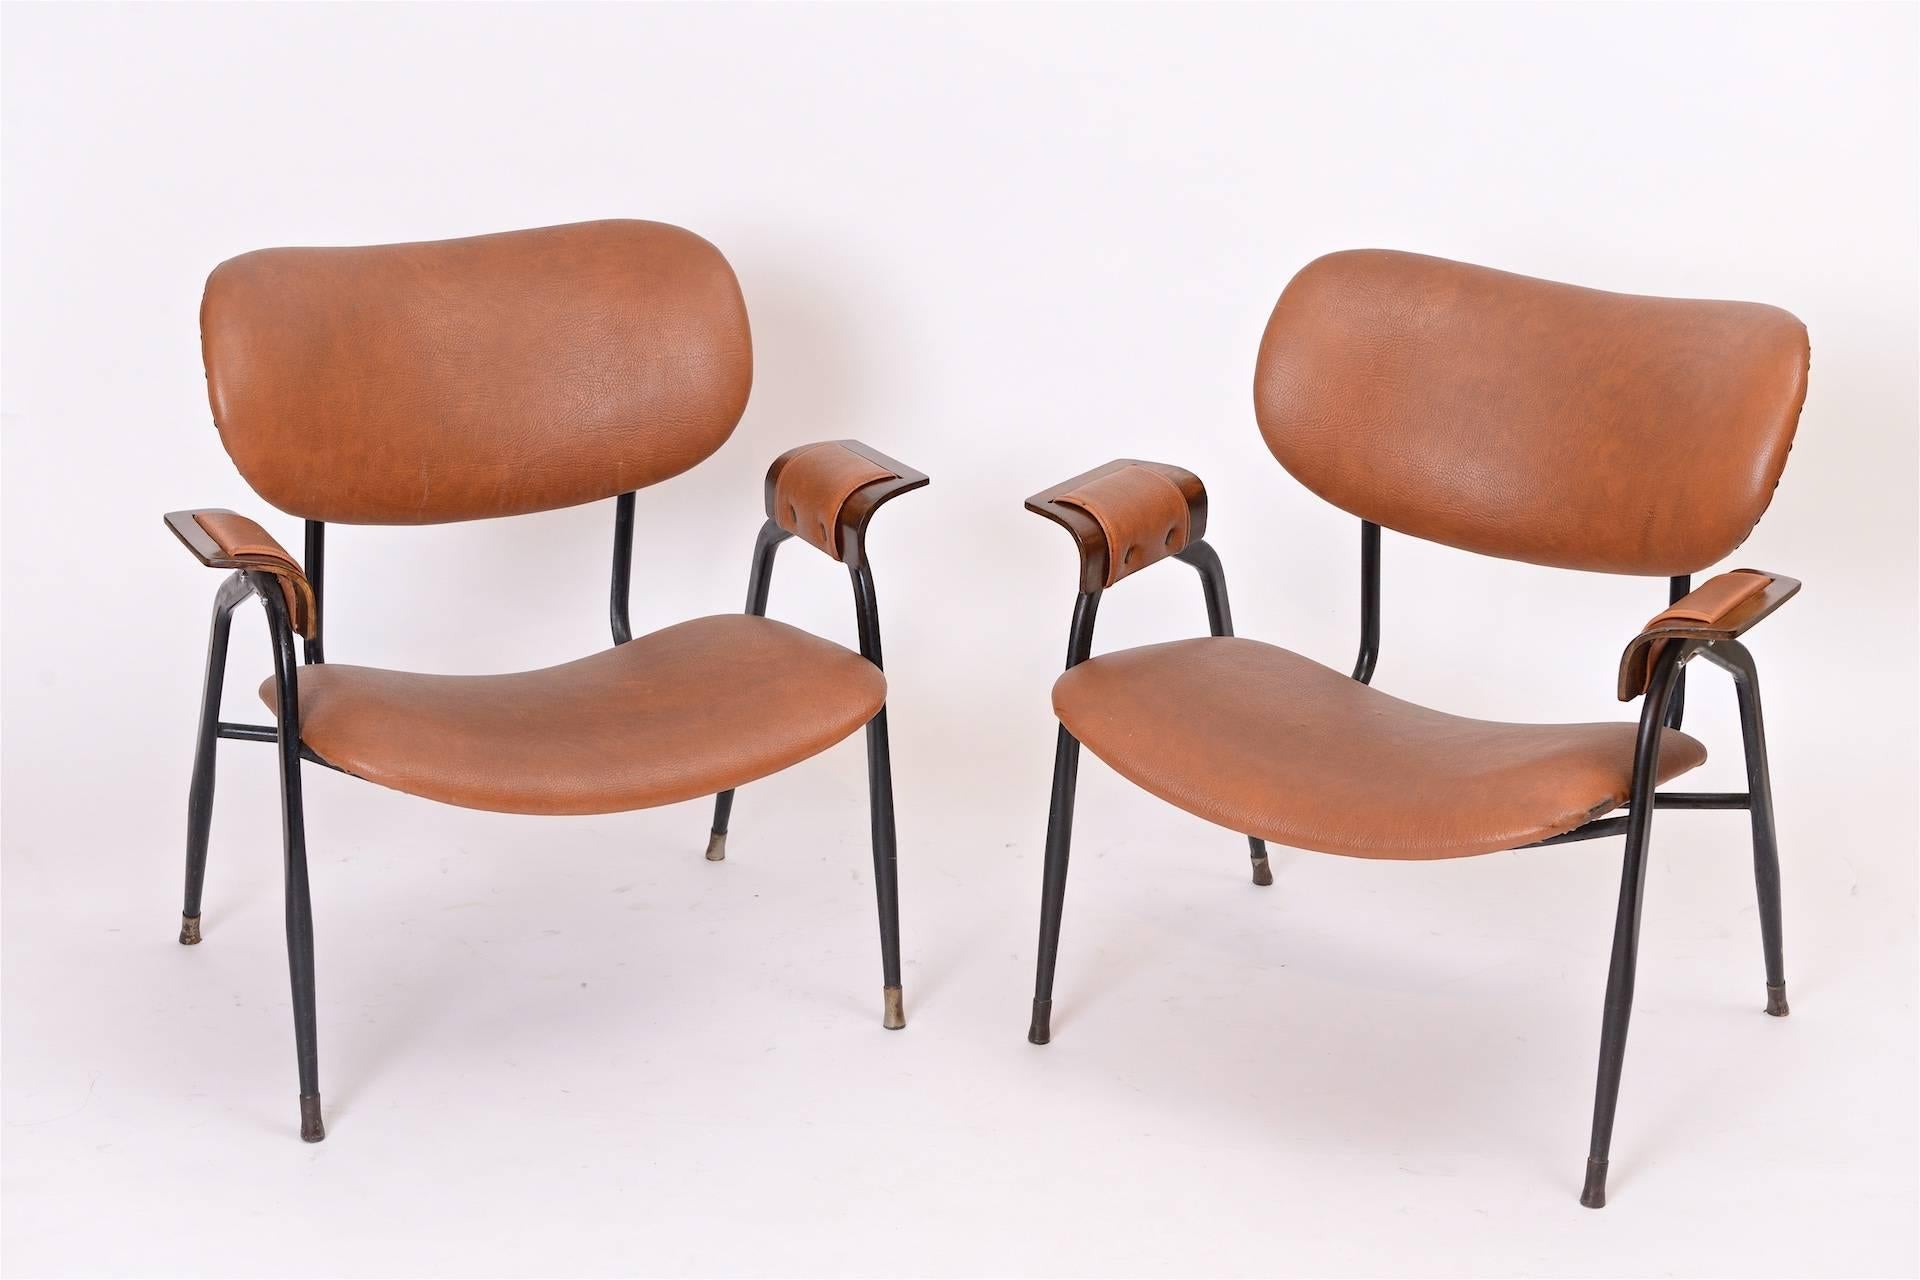 Pair of Italian chairs designed by Gastone Rinaldi, circa 1950

Original upholstery.